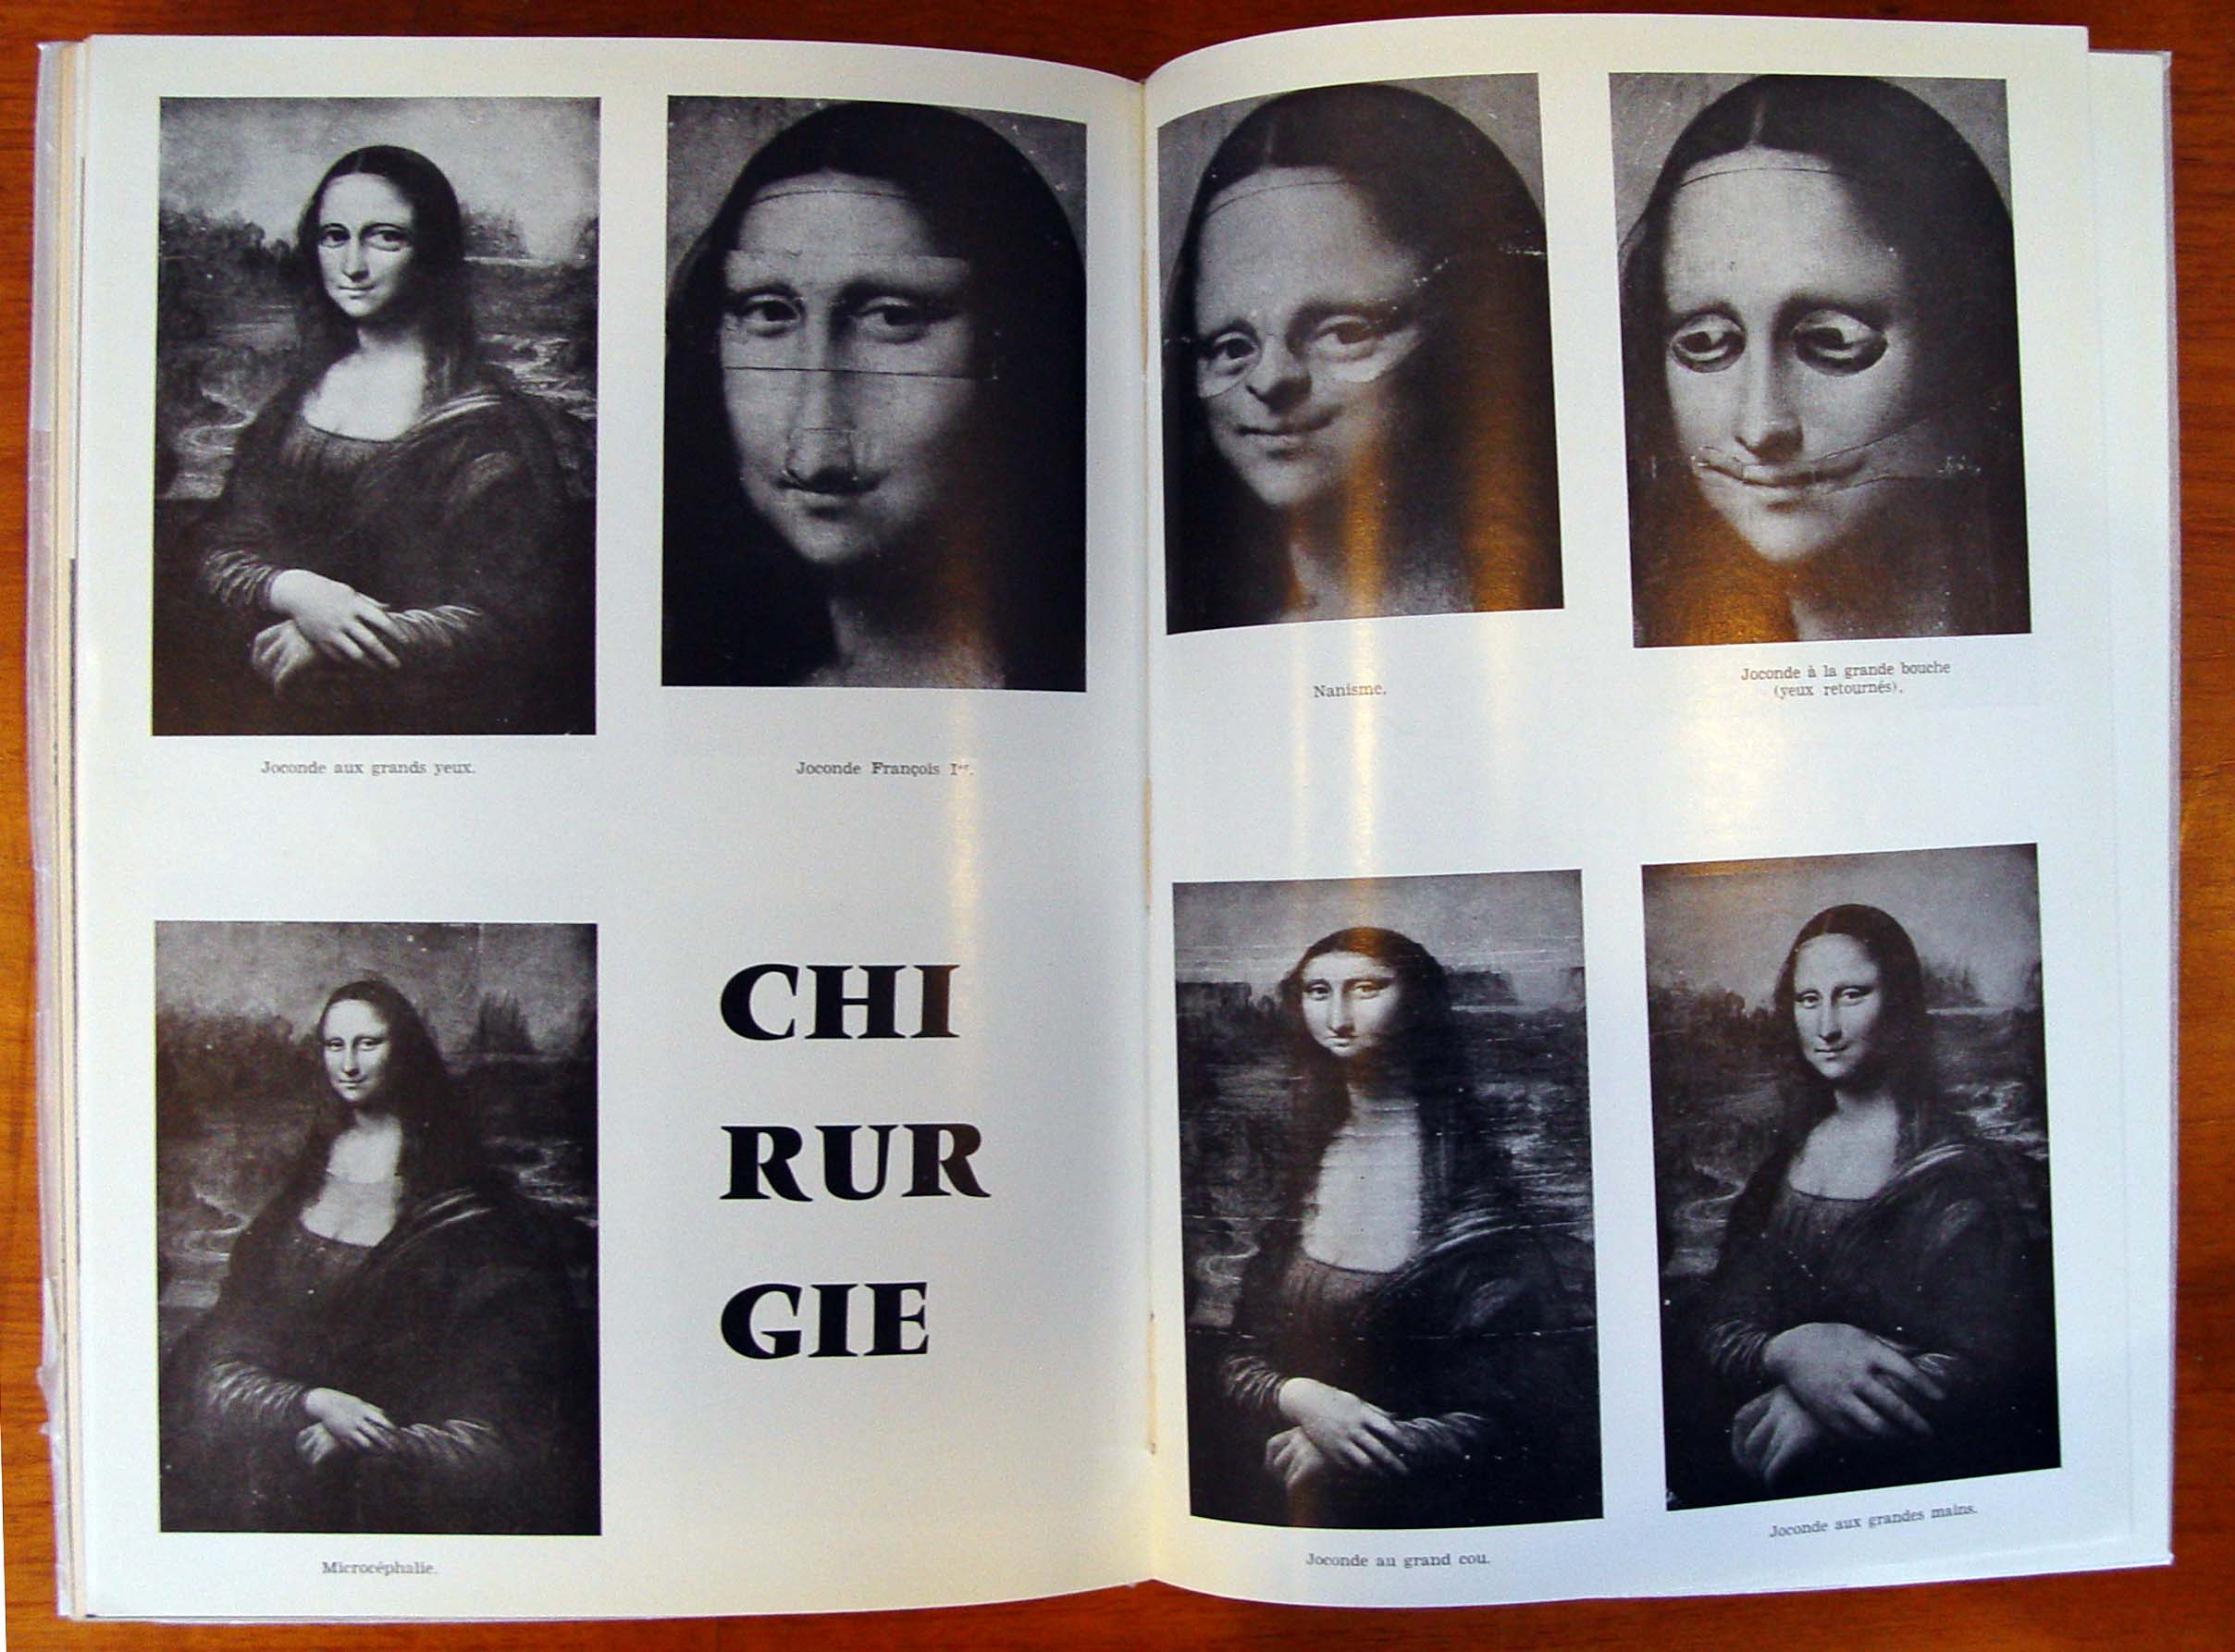 (Cosmetic?) Surgery on the Mona Lisa, Bizarre, no. 11/12 (May 1959)